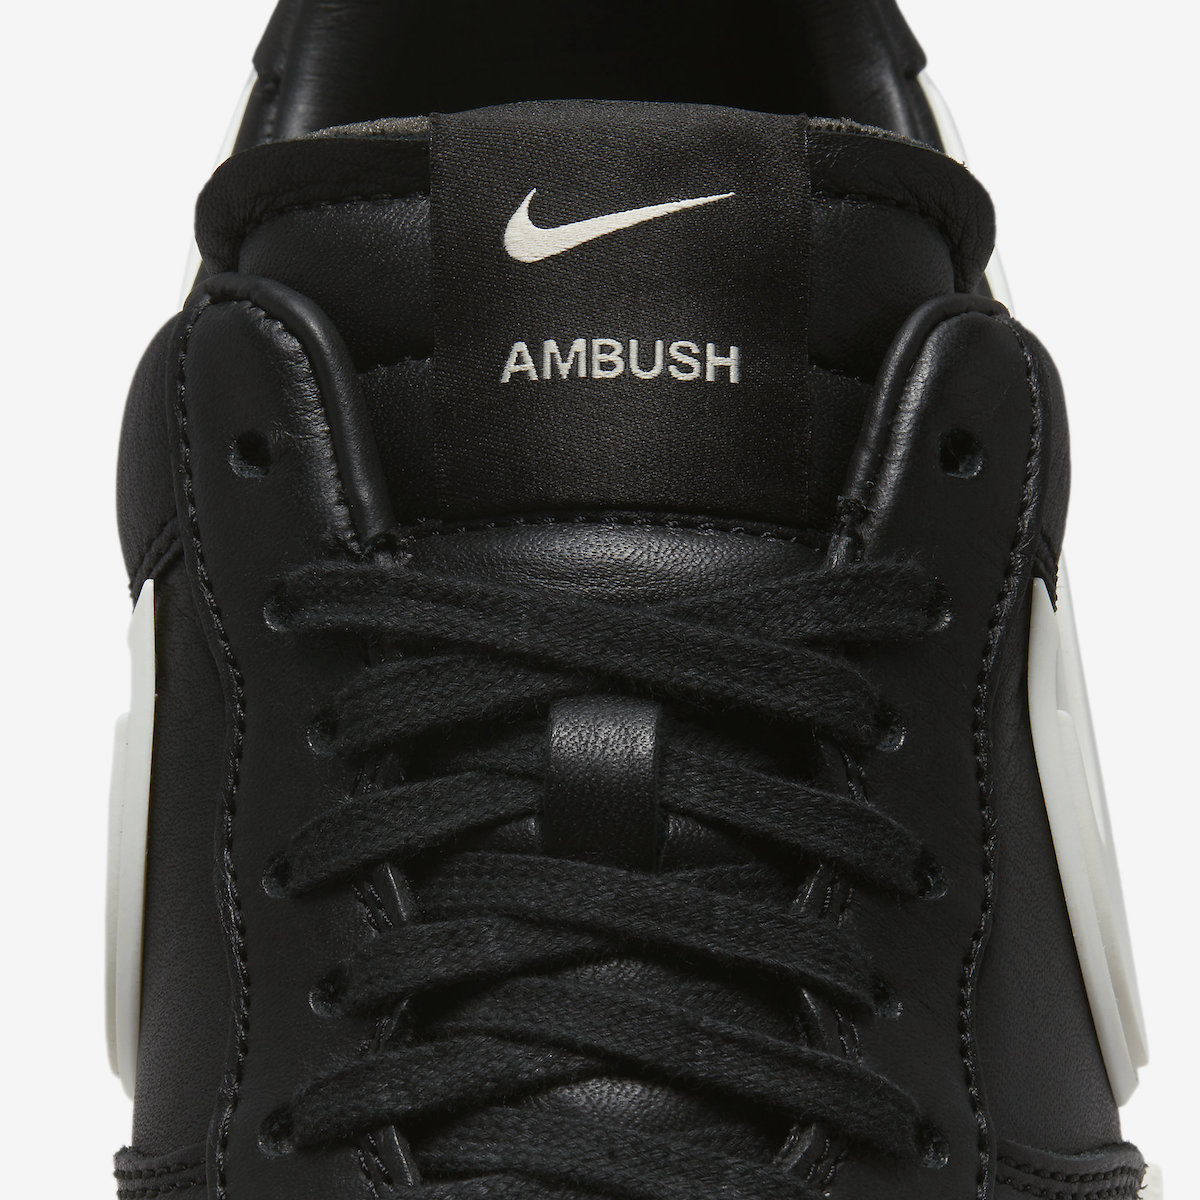 AMBUSH nike air jordan shoes big sizes Black DV3464-001 Release Date